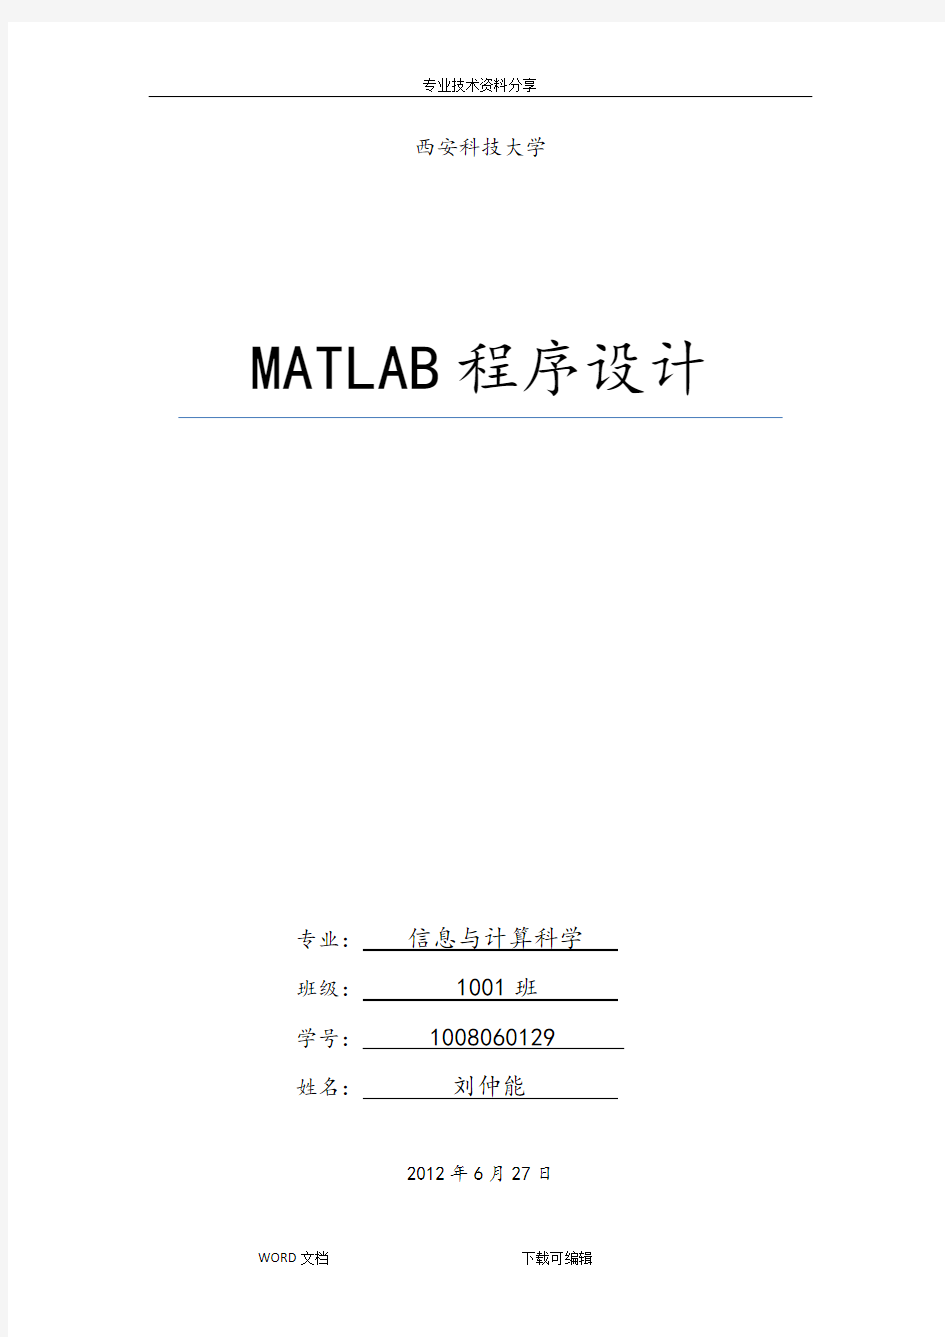 MATLAB程序设计和应用课后习题答案解析